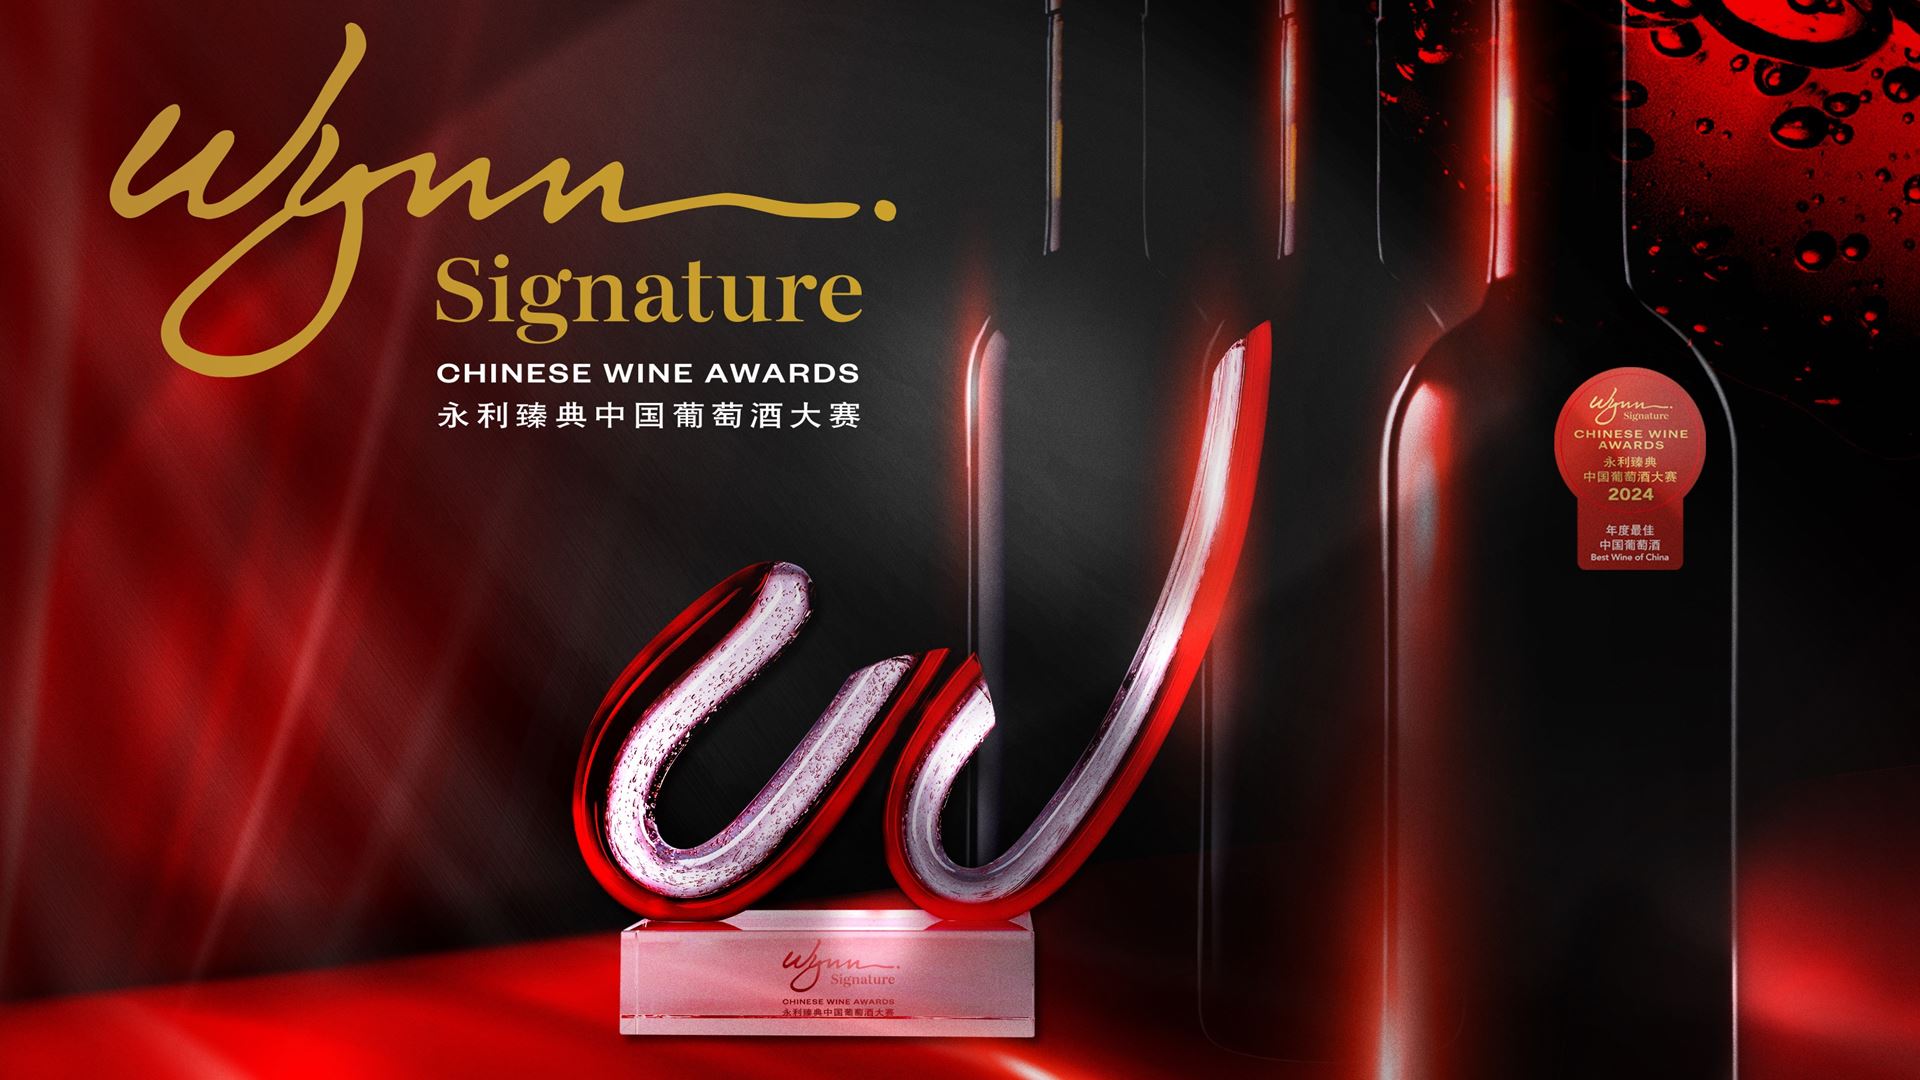 Wynn Signature Chinese Wine Awards